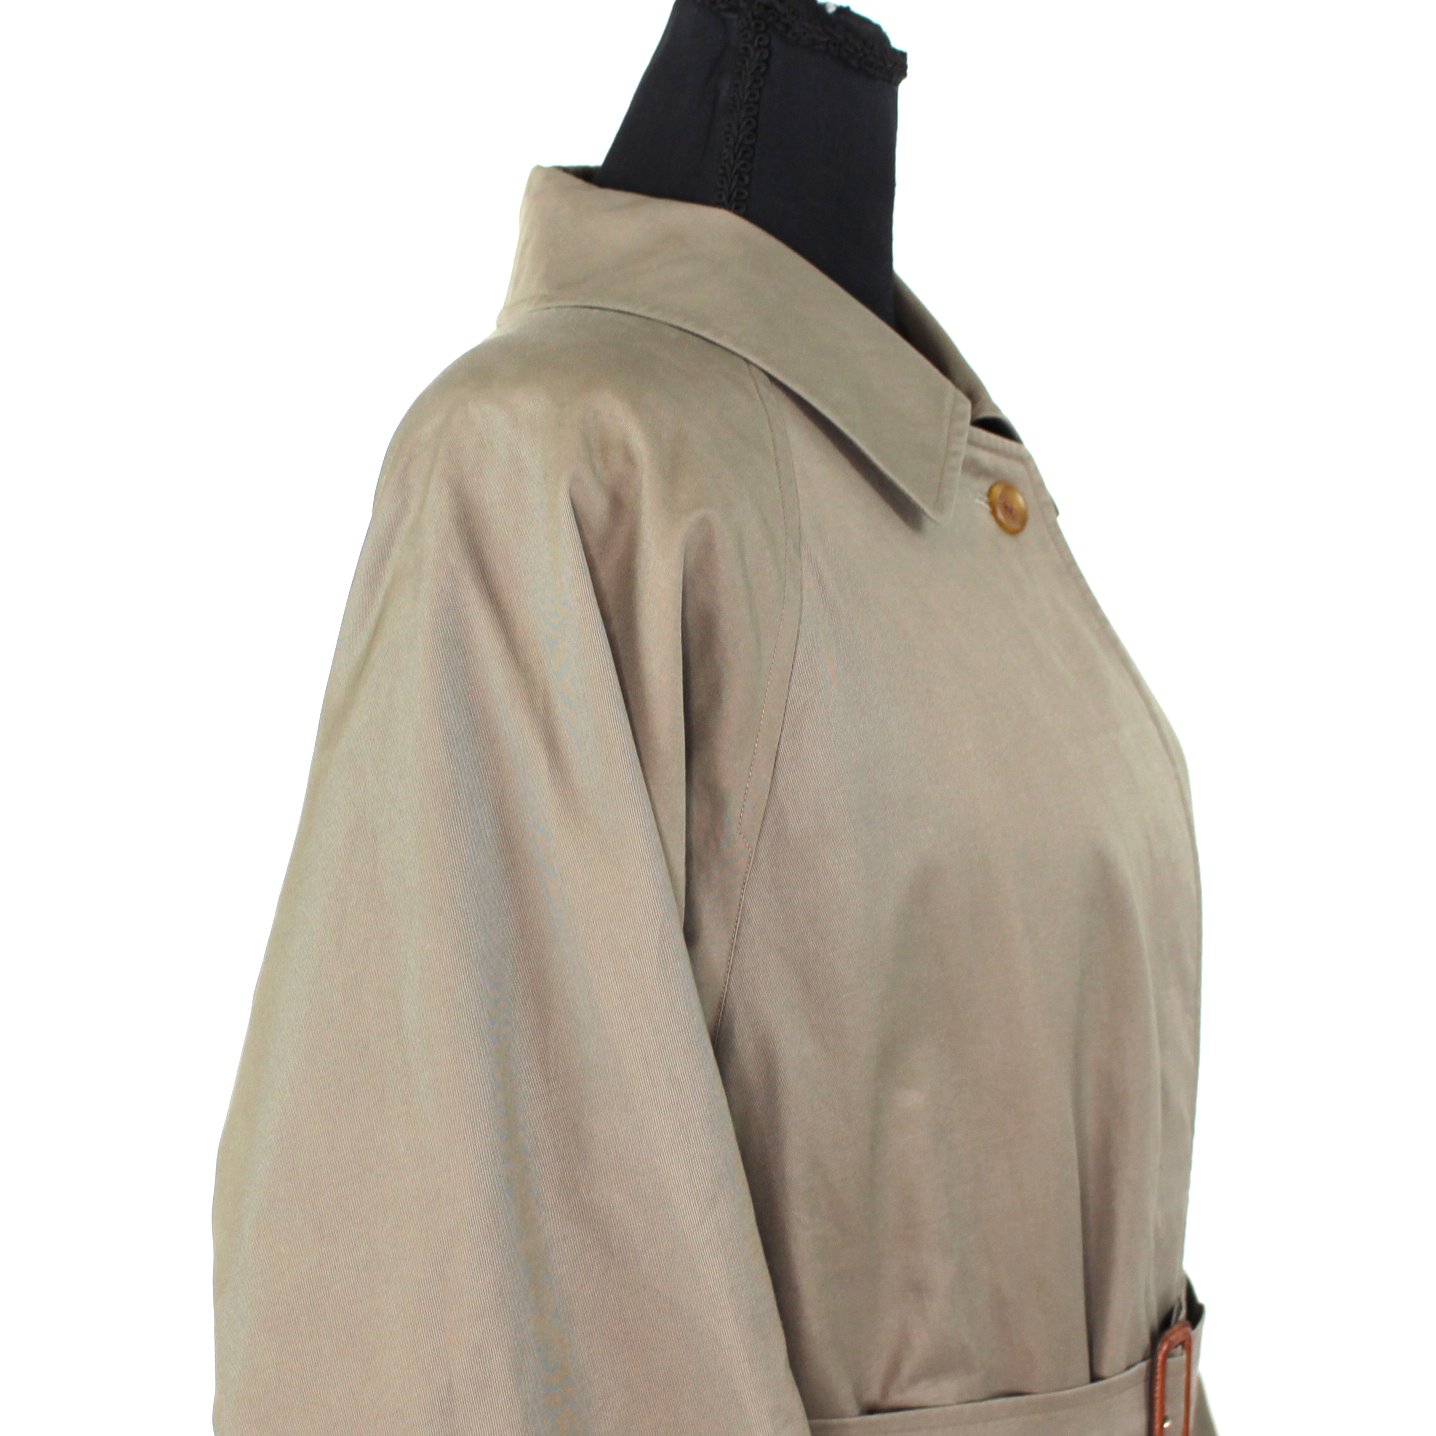 Burberry Nova Check Lined Trench Coat